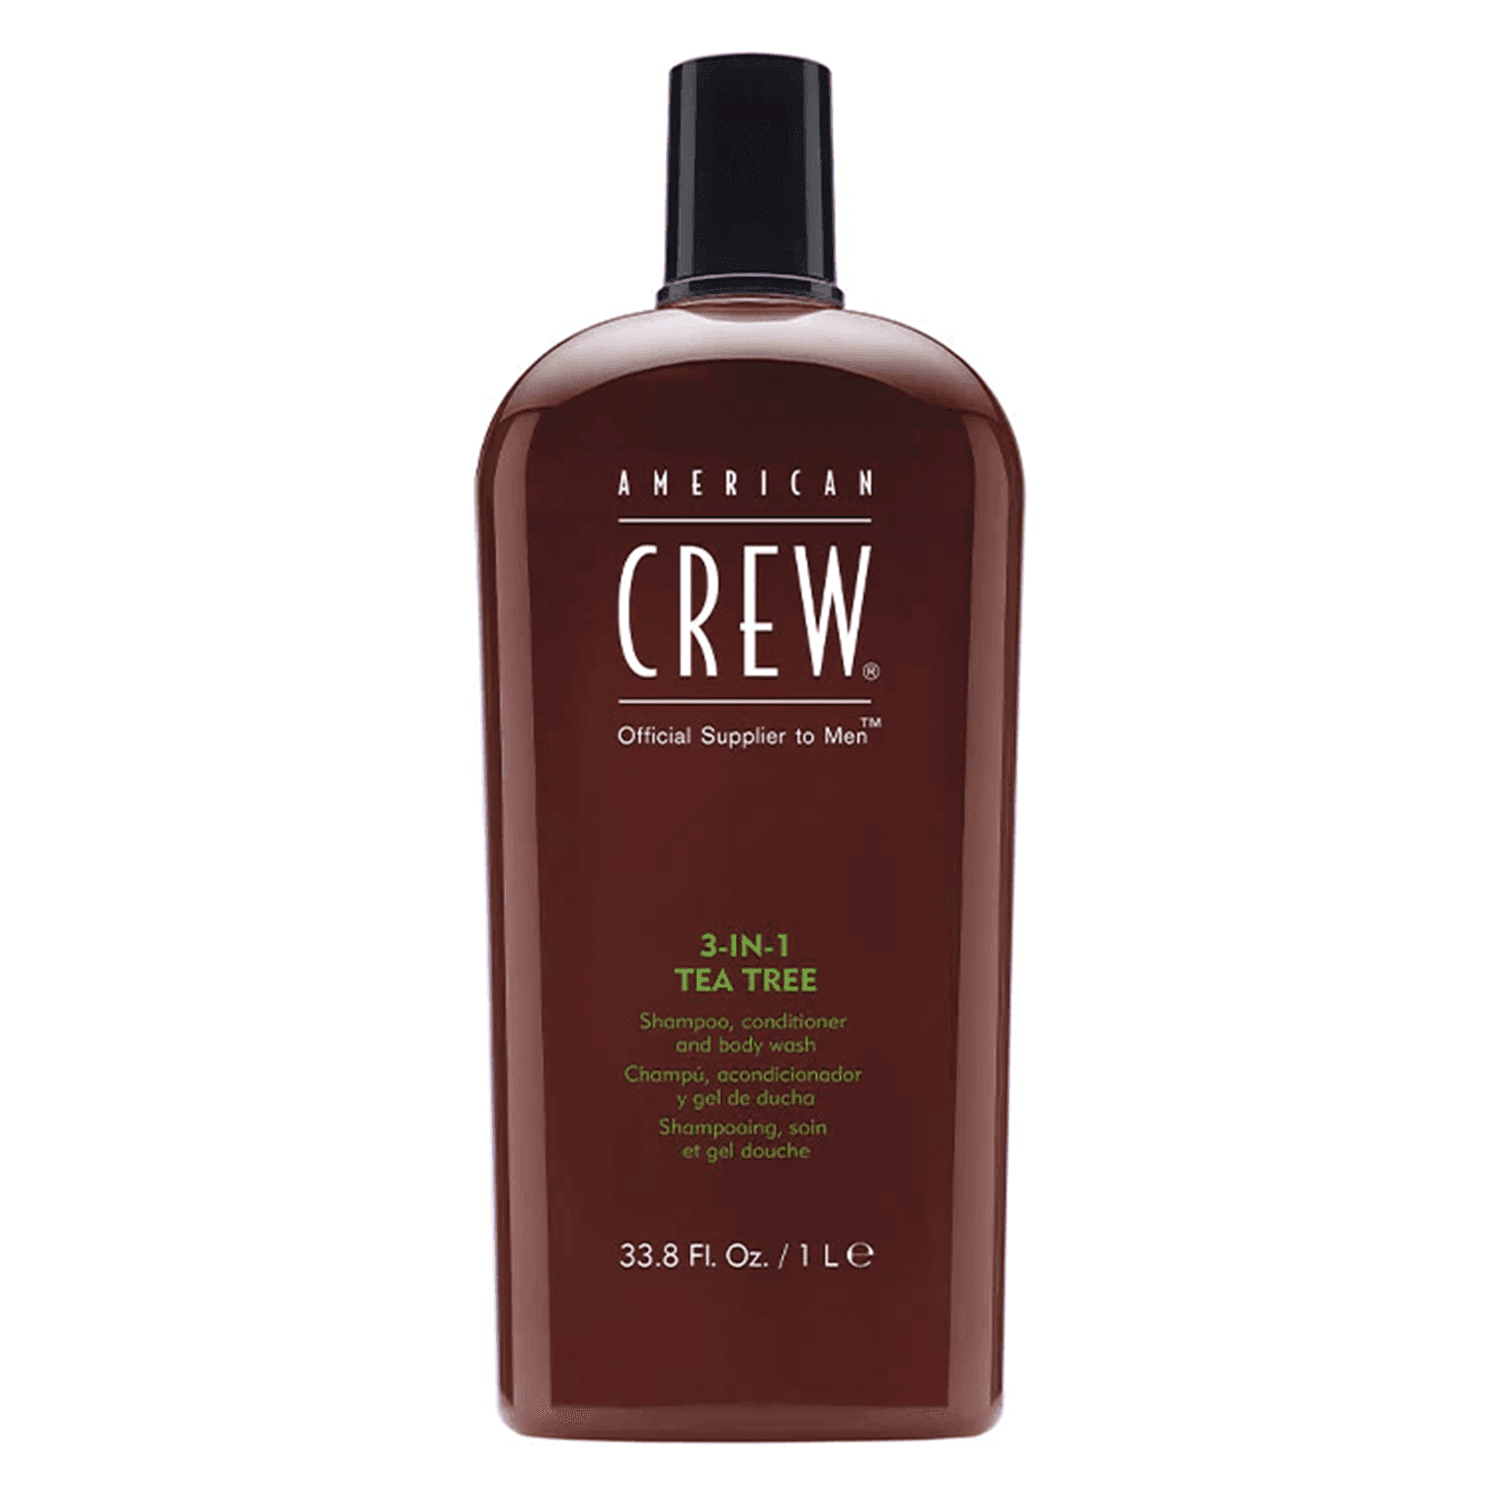 Crew Hair & Body Care - 3IN1 TEA TREE Shampooing, soin, gel douche parfum arbre à thé